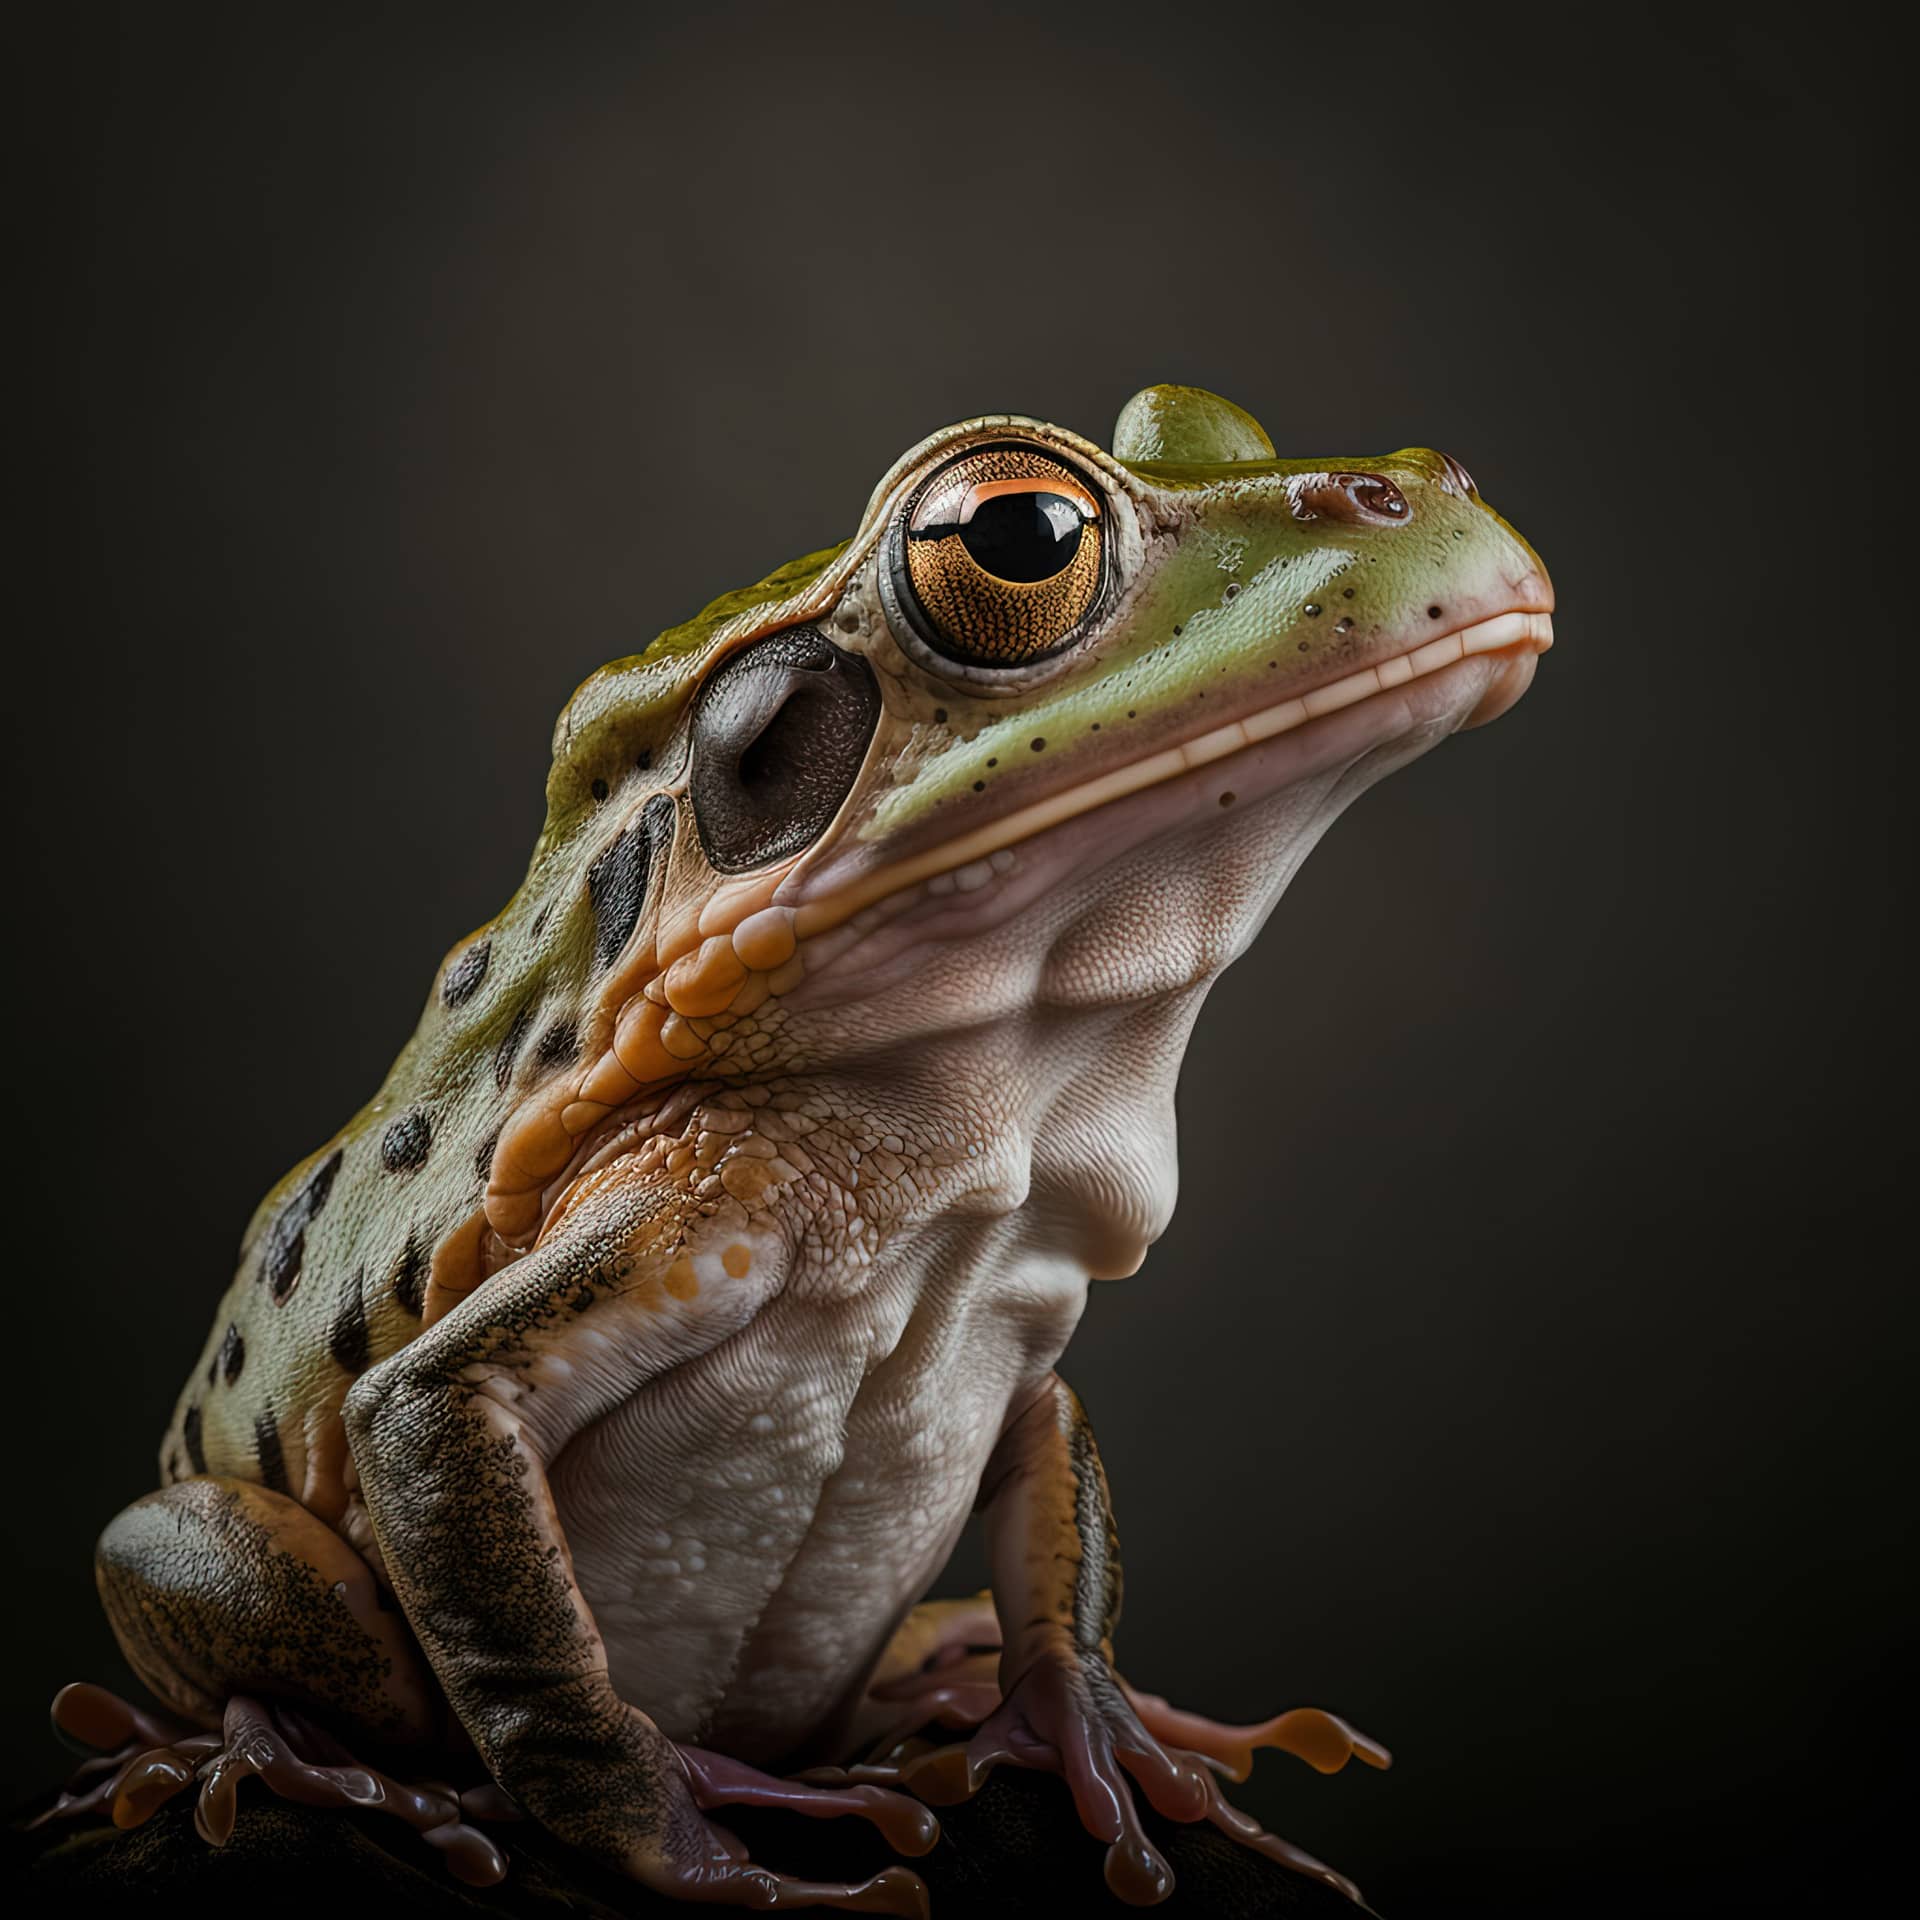 Cute little colorful frog portrait studio generative